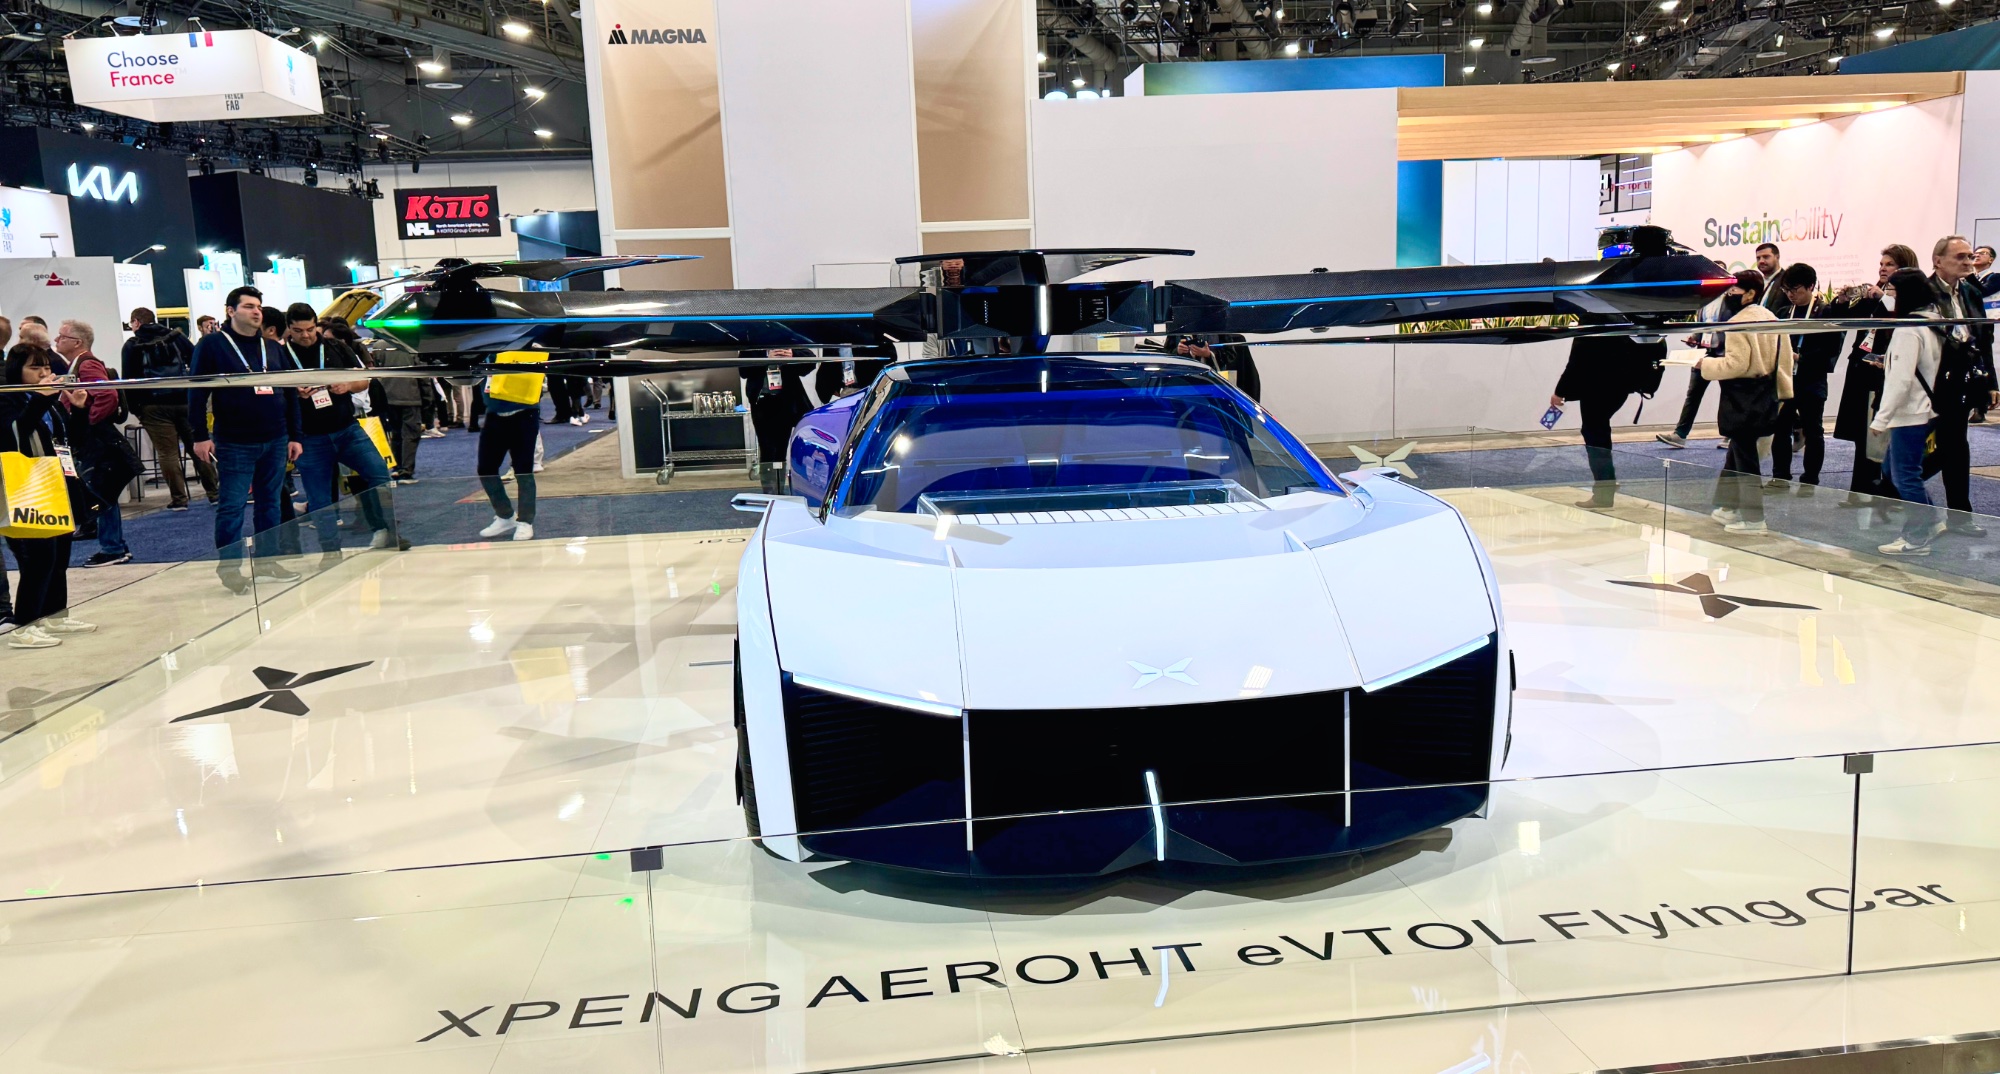 XPeng Aeroht eVTOL Flying Car avant